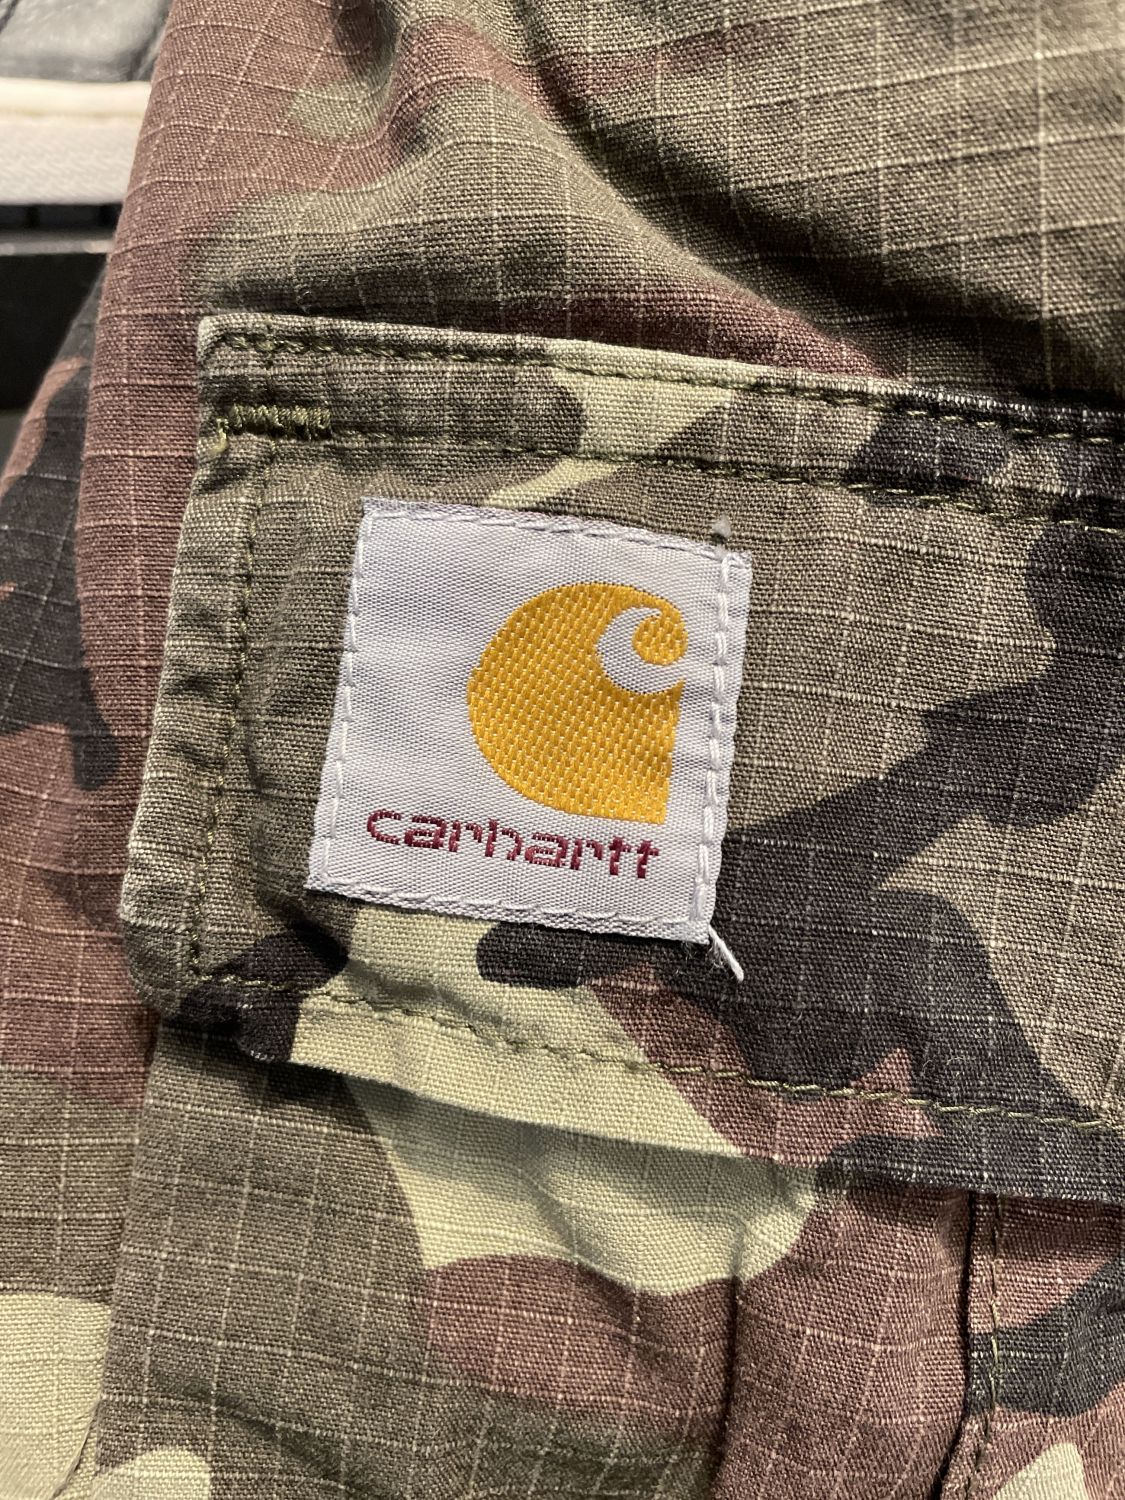 18572 - Carhartt Camou Cargo Pants | Item Details - AfterMarket